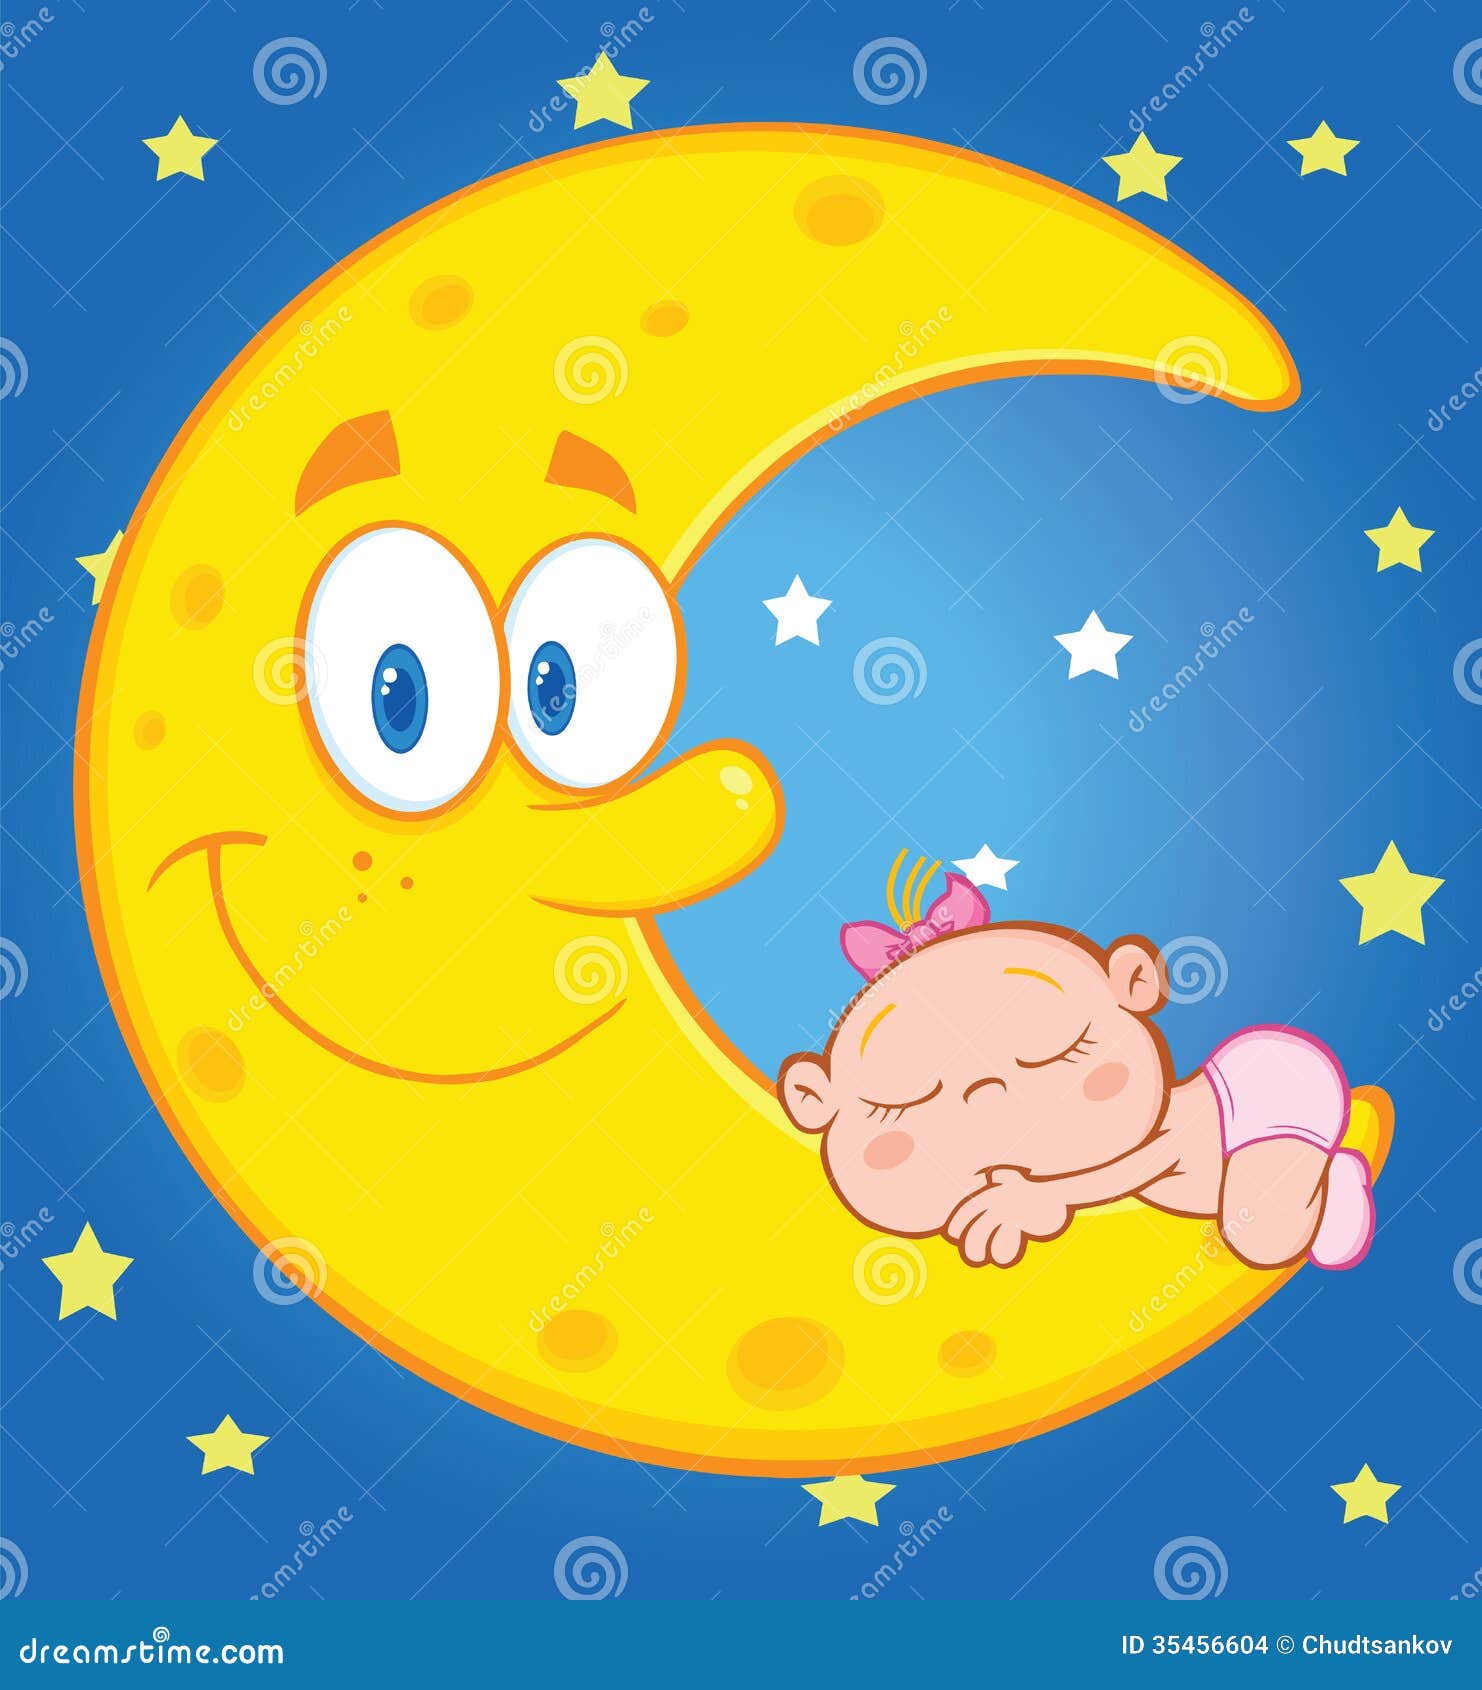 cute-baby-girl-sleeps-smiling-moon-over-blue-sky-stars-cartoon-character-35456604.jpg